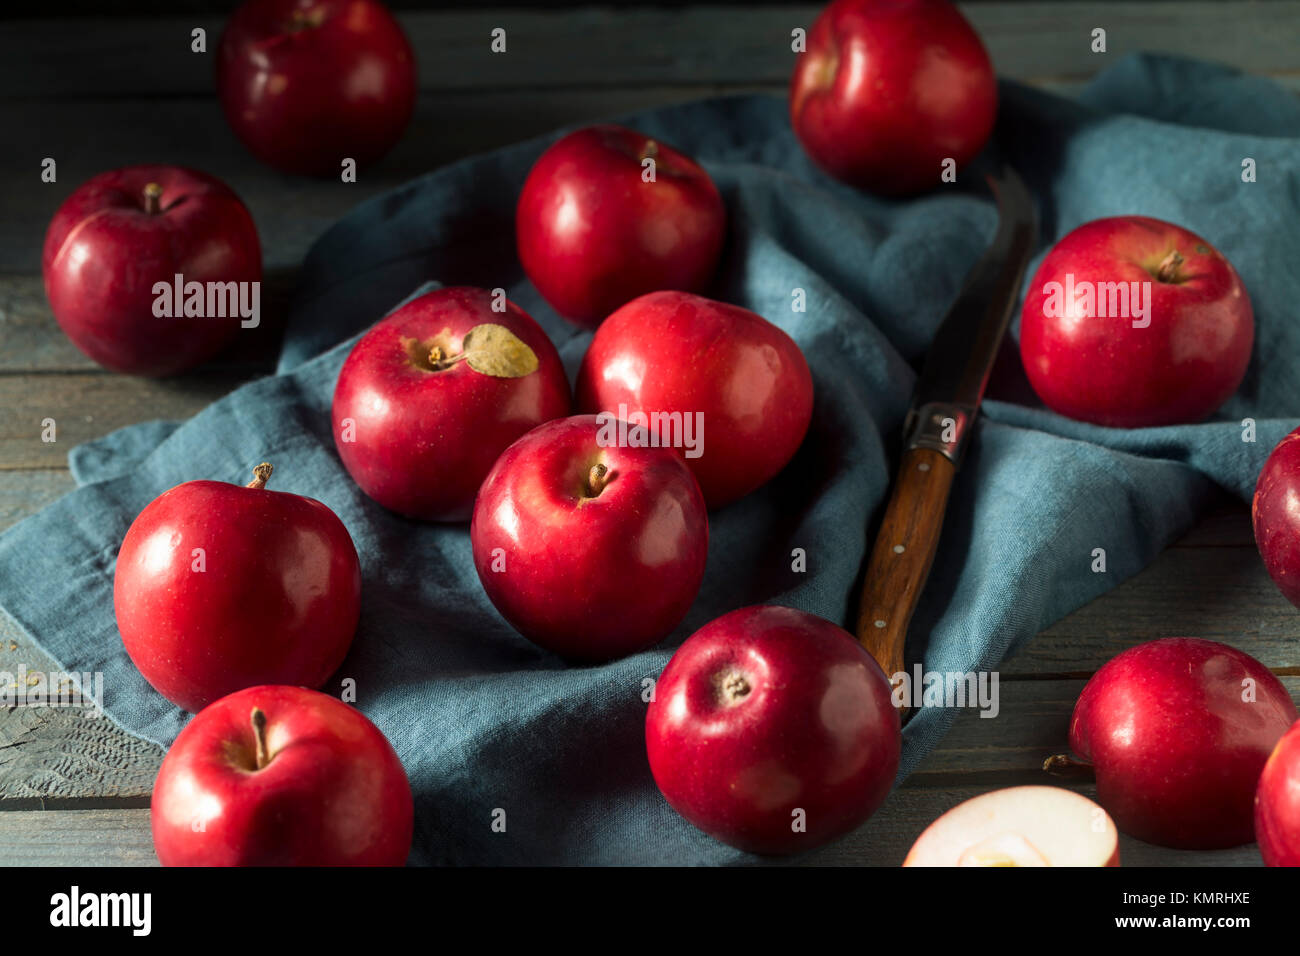 https://c8.alamy.com/comp/KMRHXE/red-organic-macintosh-apples-ready-to-eat-KMRHXE.jpg